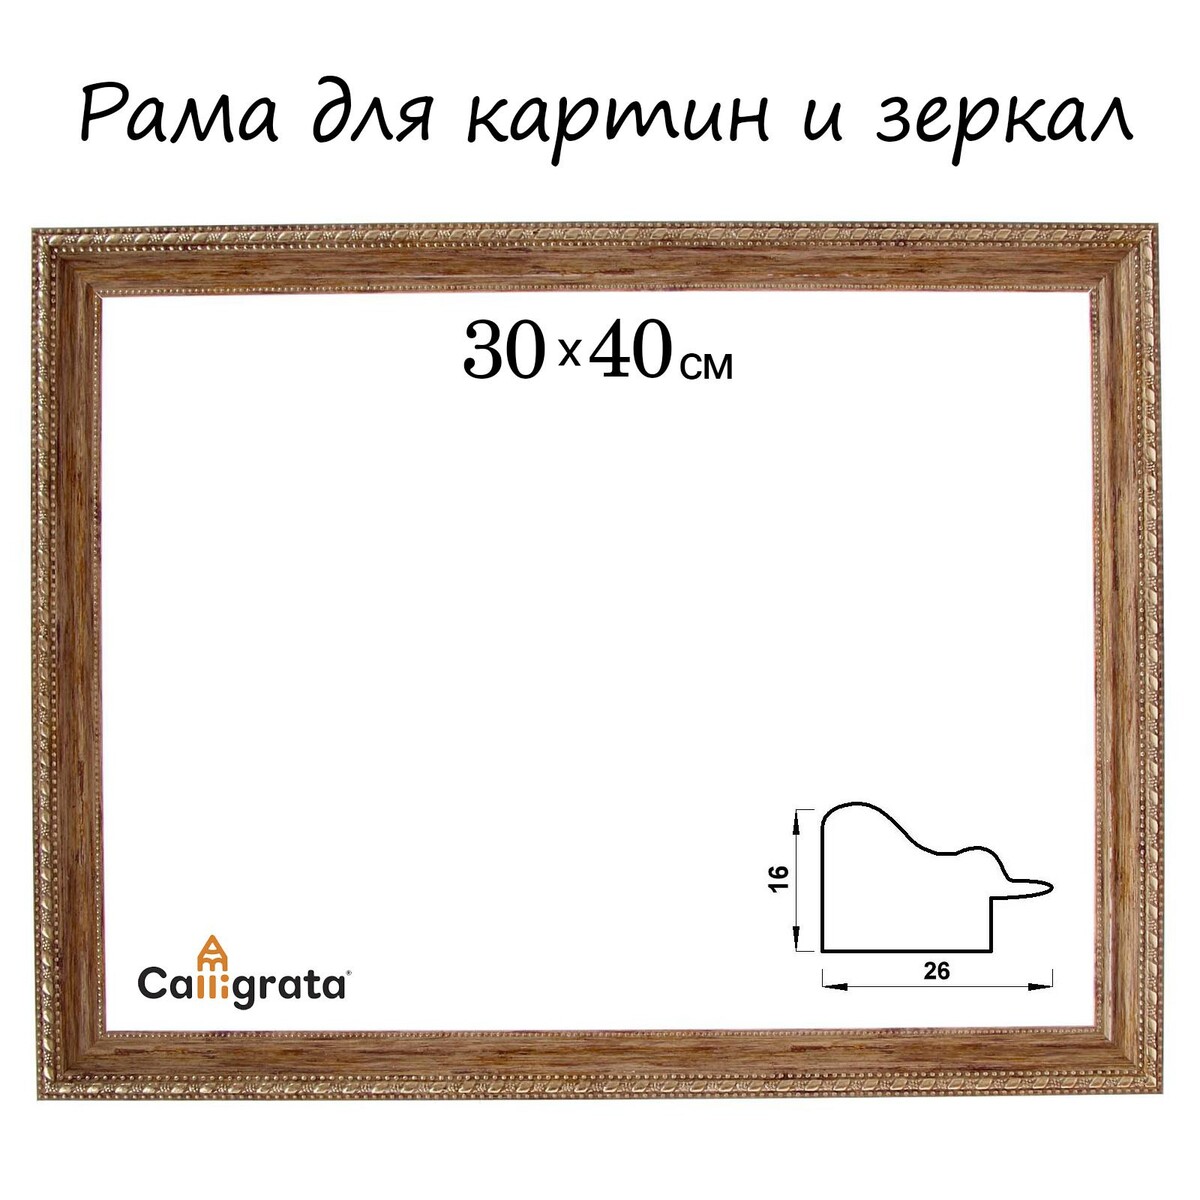 Рама для картин (зеркал) 30 х 40 х 2,6 см, пластиковая, calligrata 6429, дерево с золотом